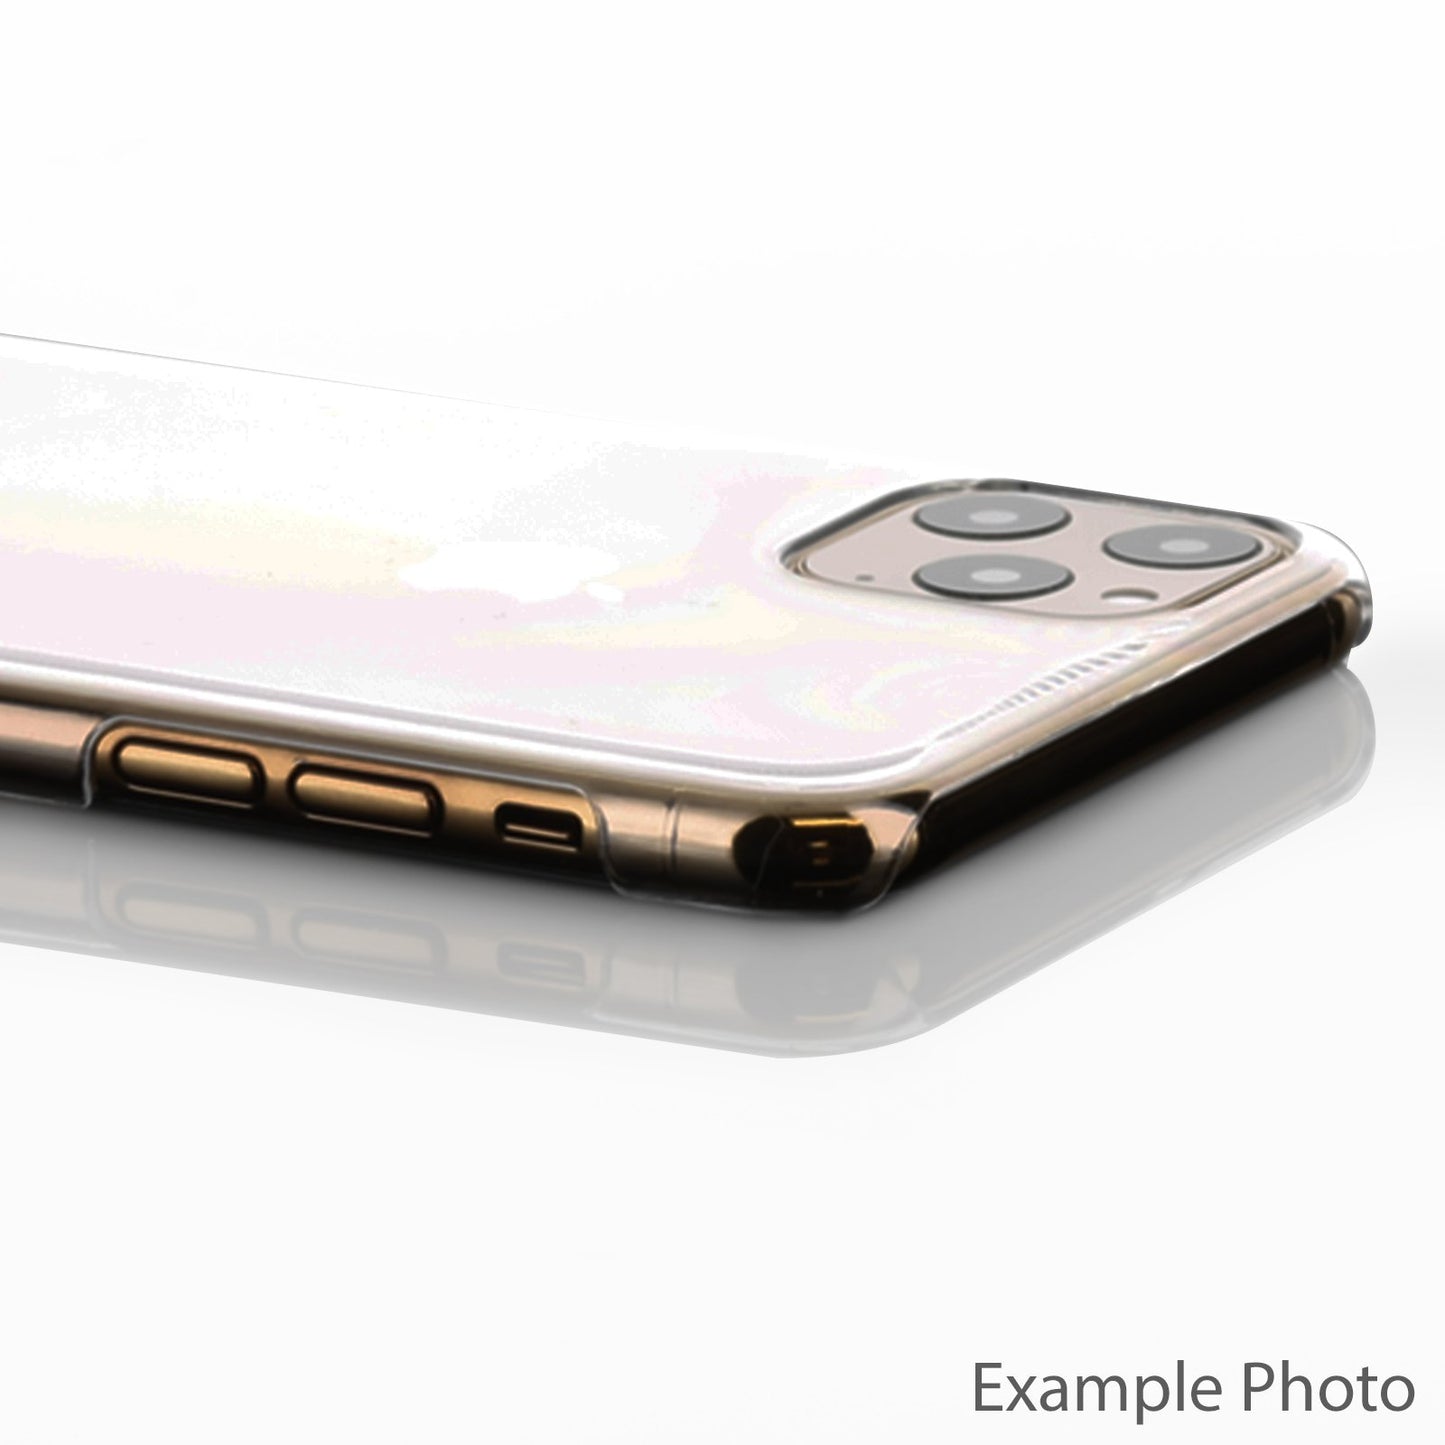 Personalised Apple iPhone Hard Case Black Initial on Cheetah Print